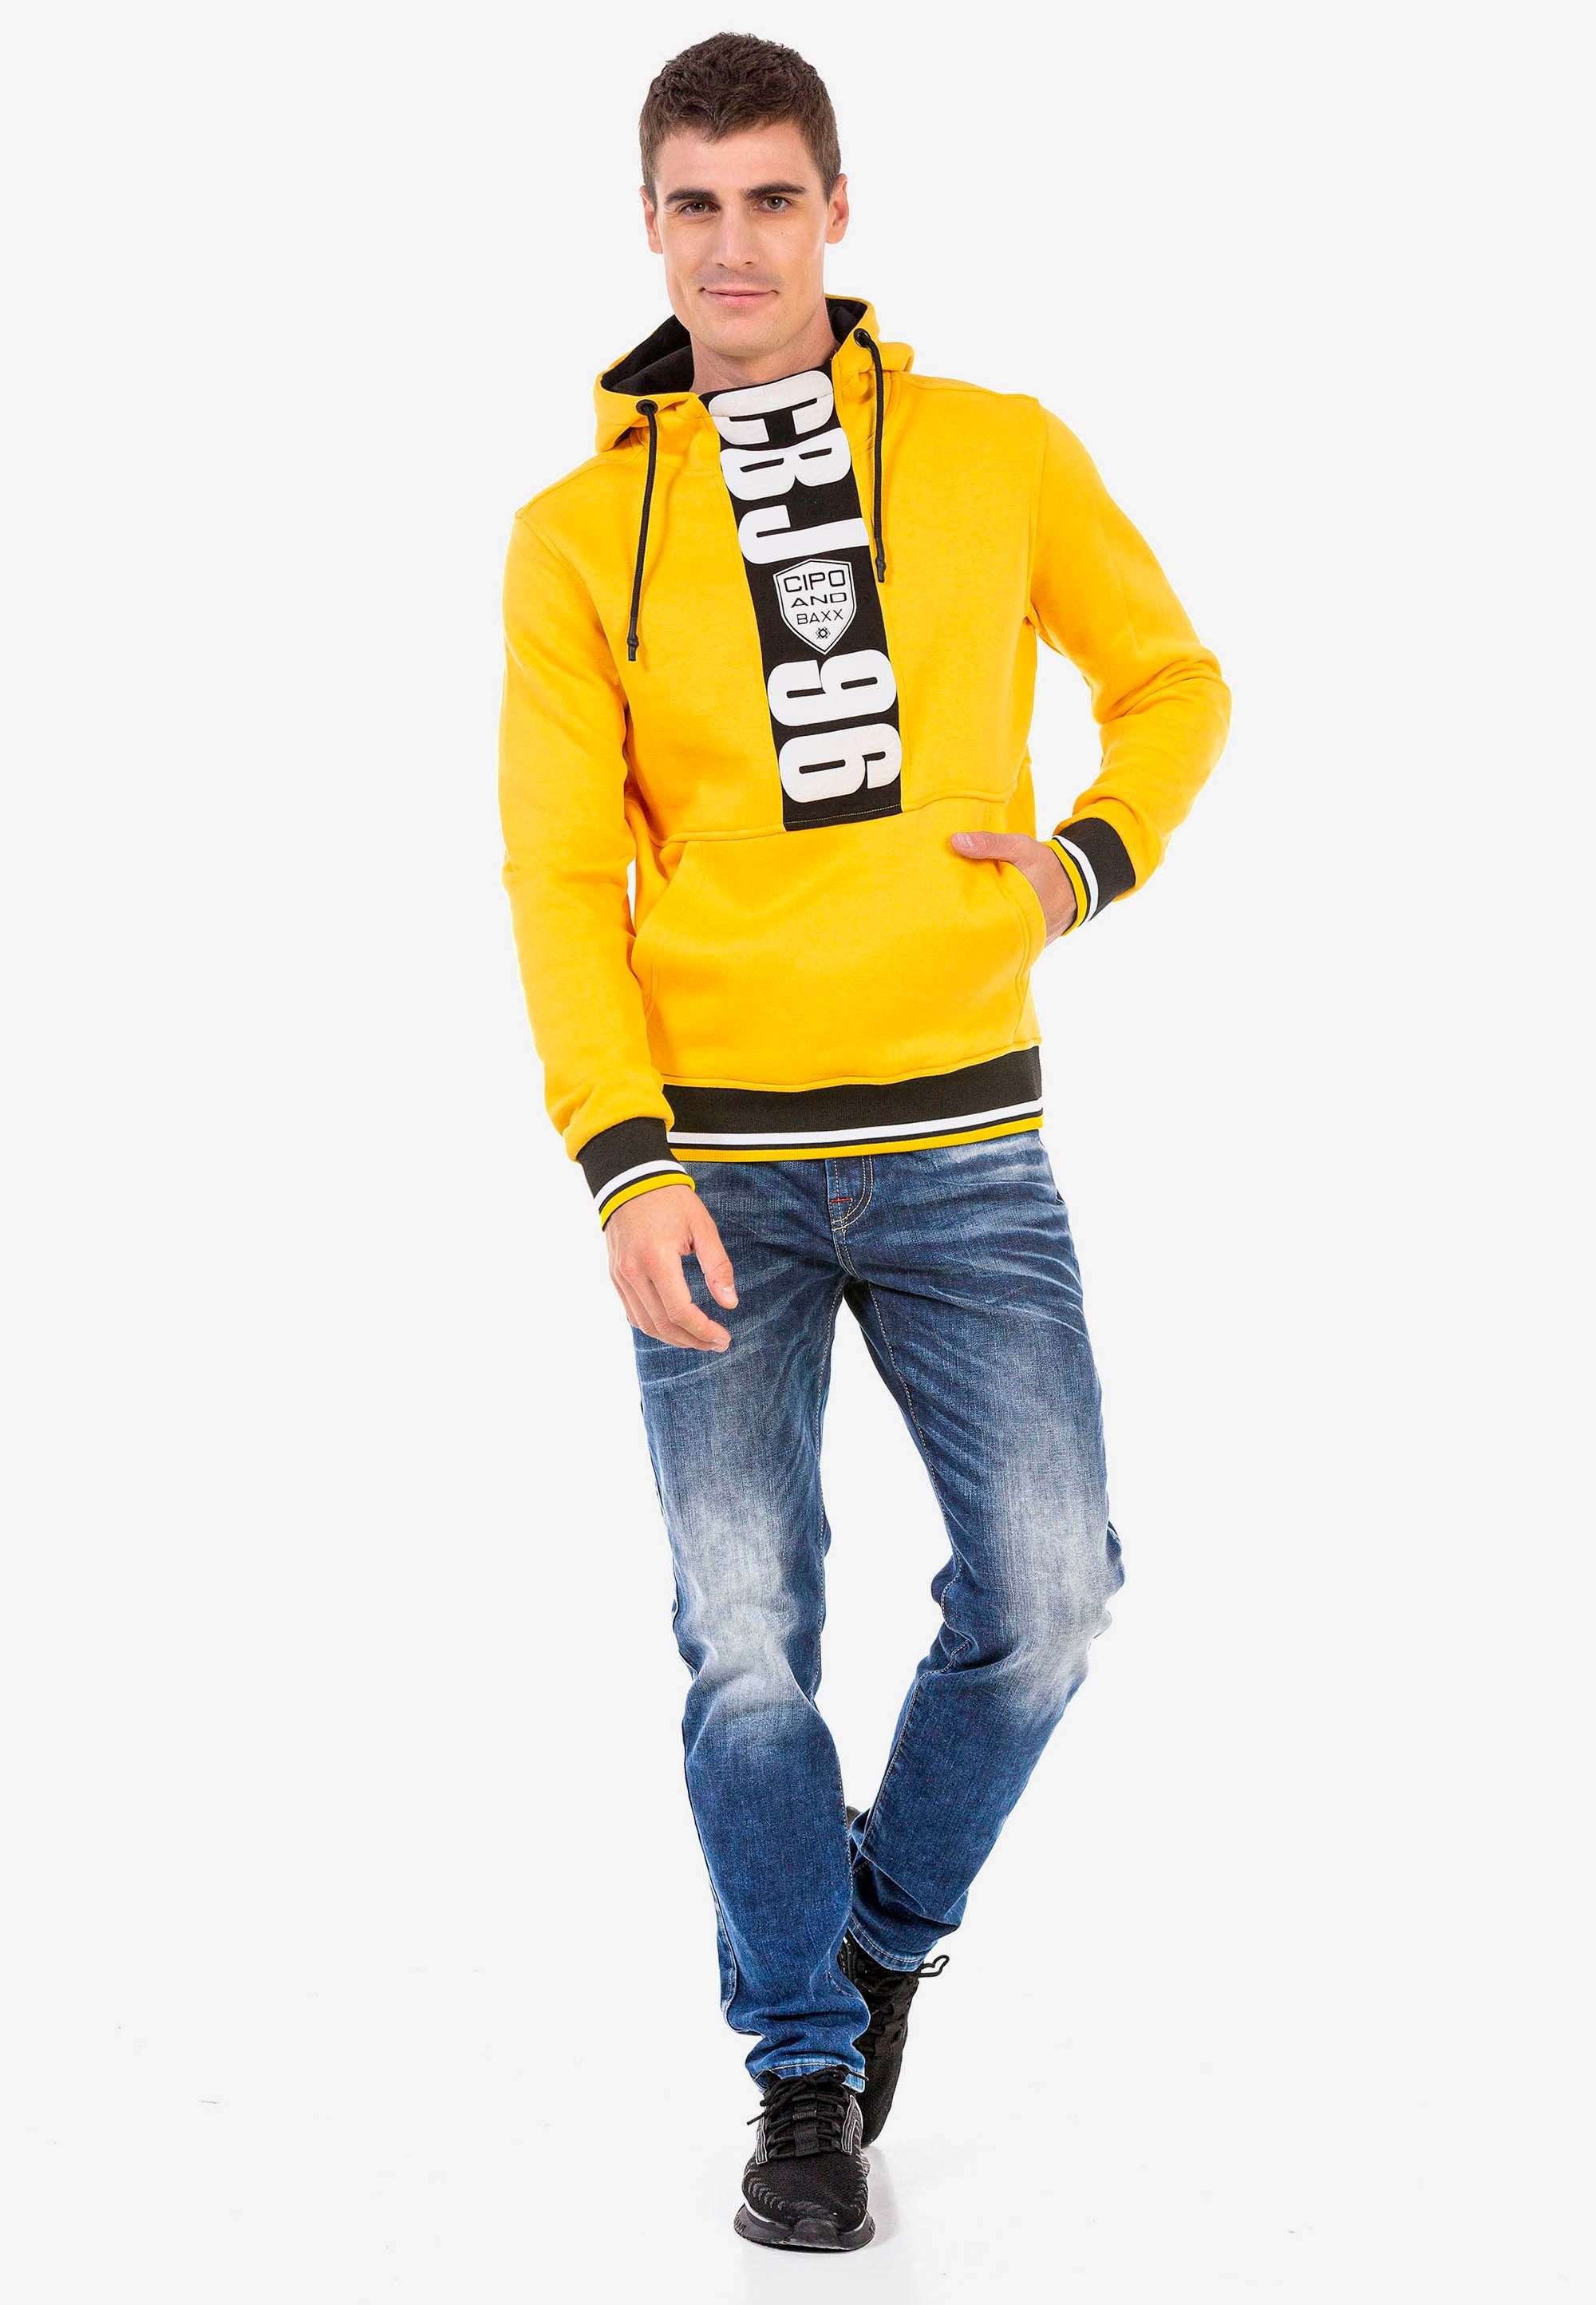 Cipo & Baxx tollen gelb Kapuzensweatshirt mit Markenprints